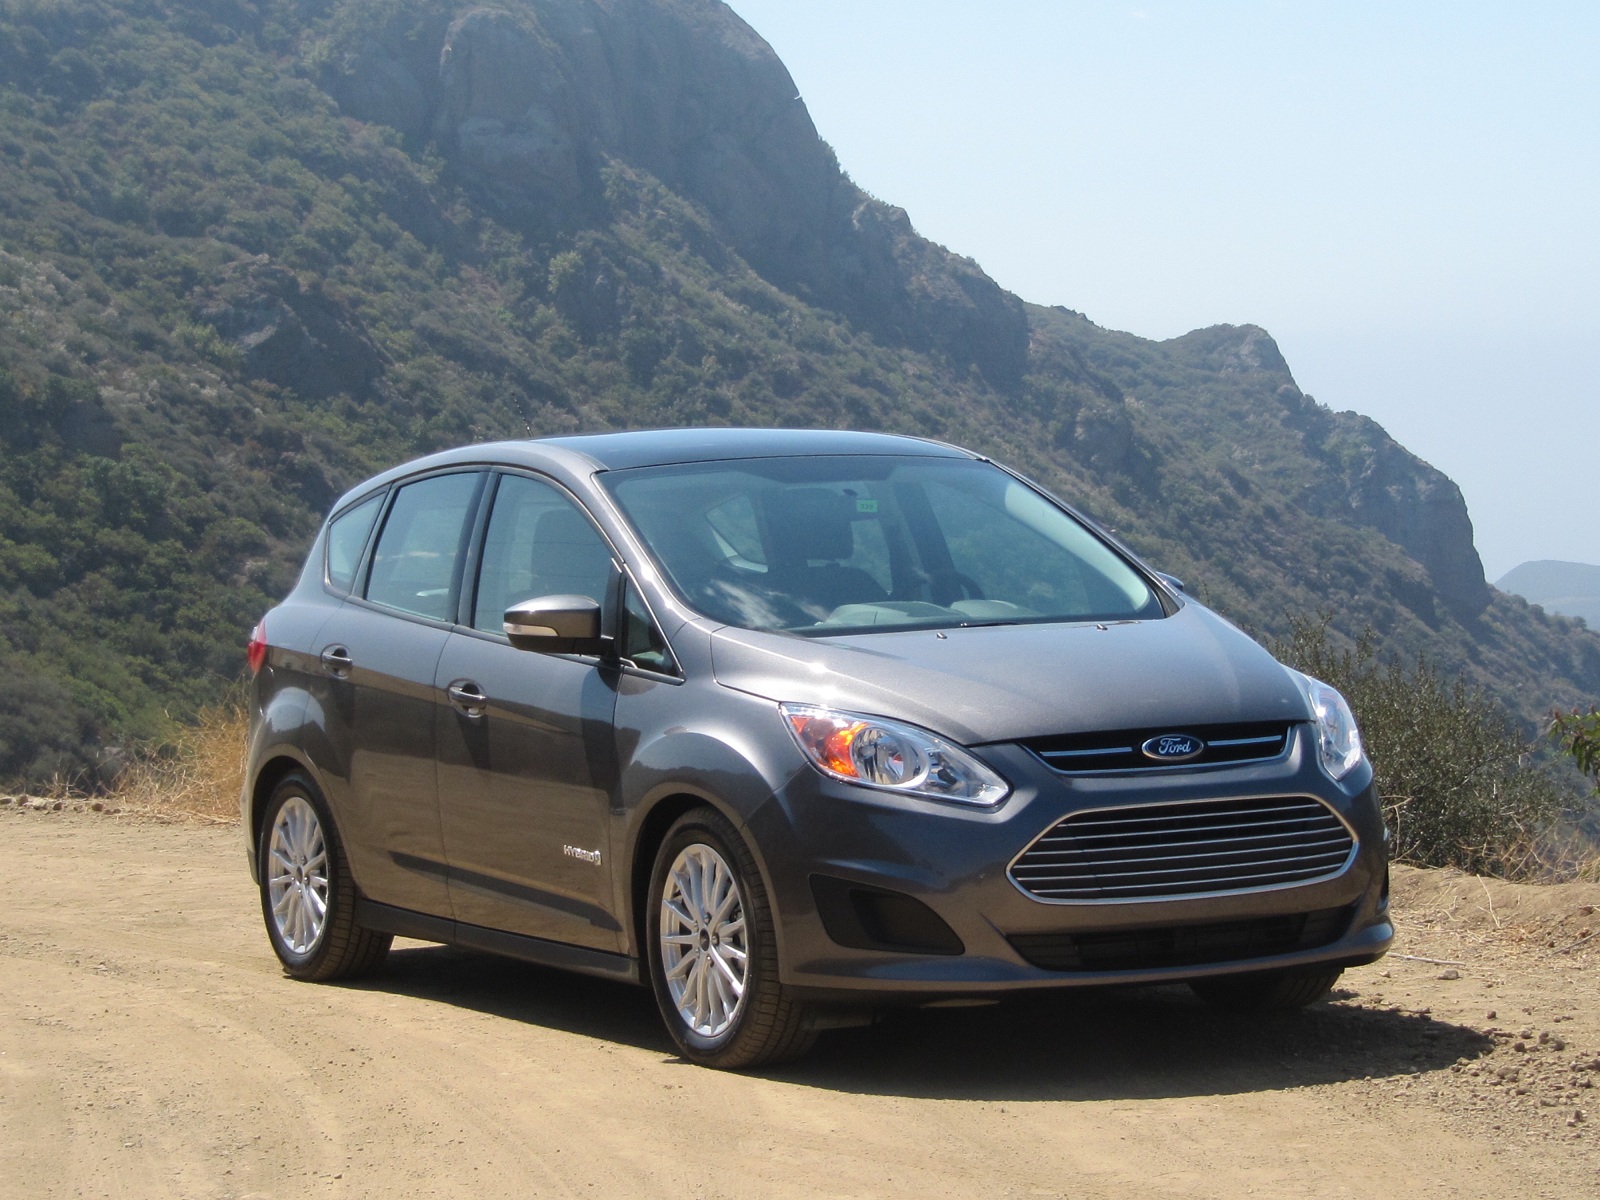 Ford Hikes Cash Incentives On Last 2014 C-Max Hybrid, Energi Models